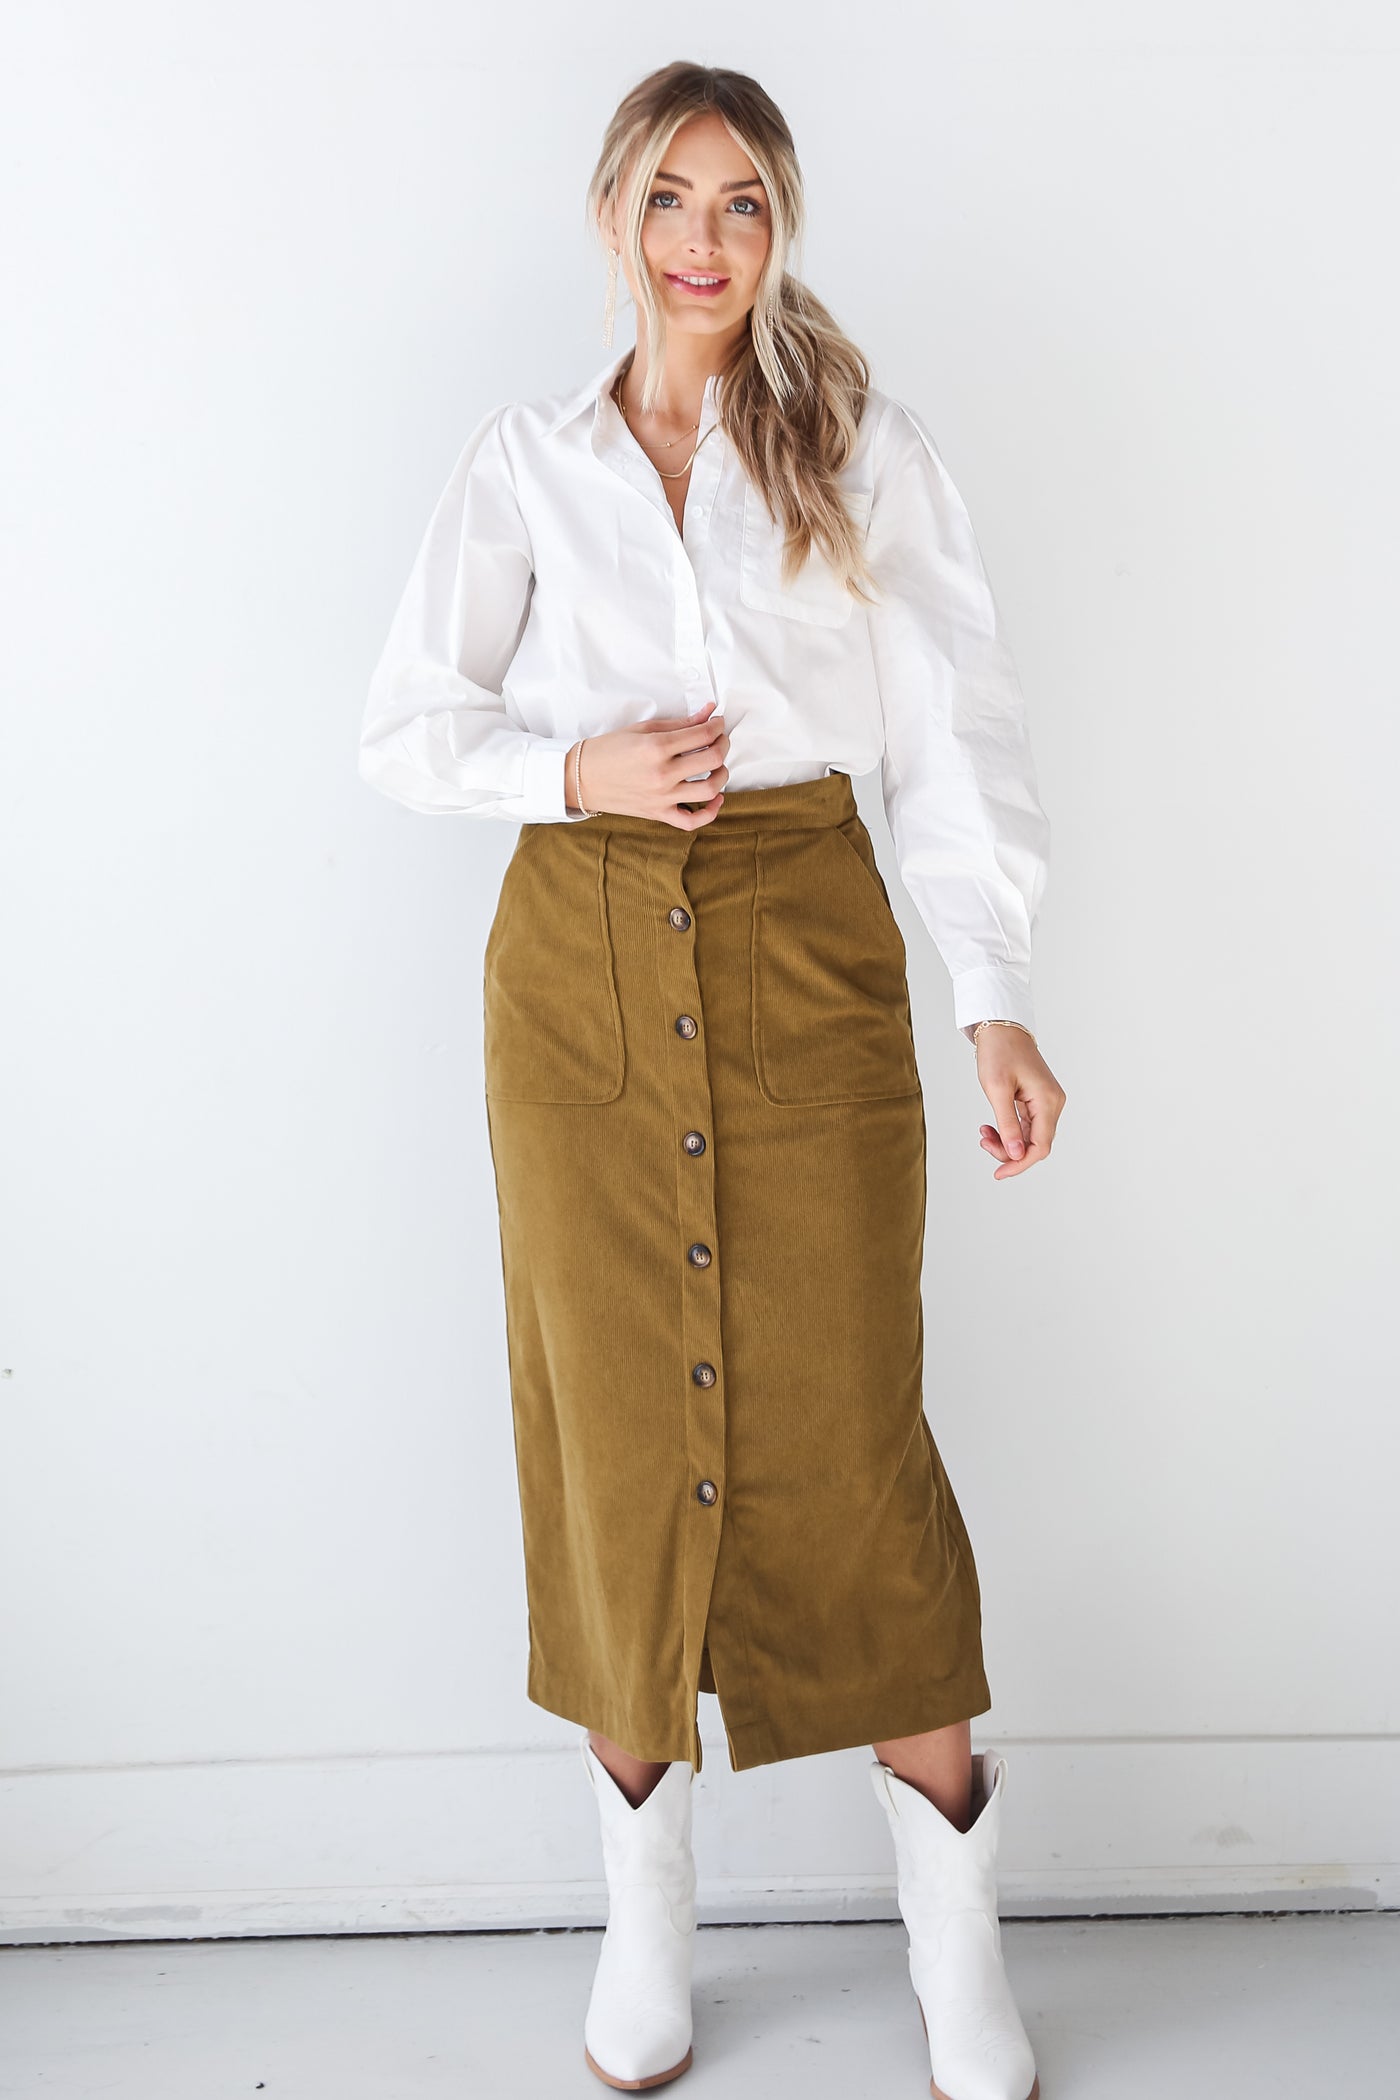 Olive Corduroy Midi Skirt for fall